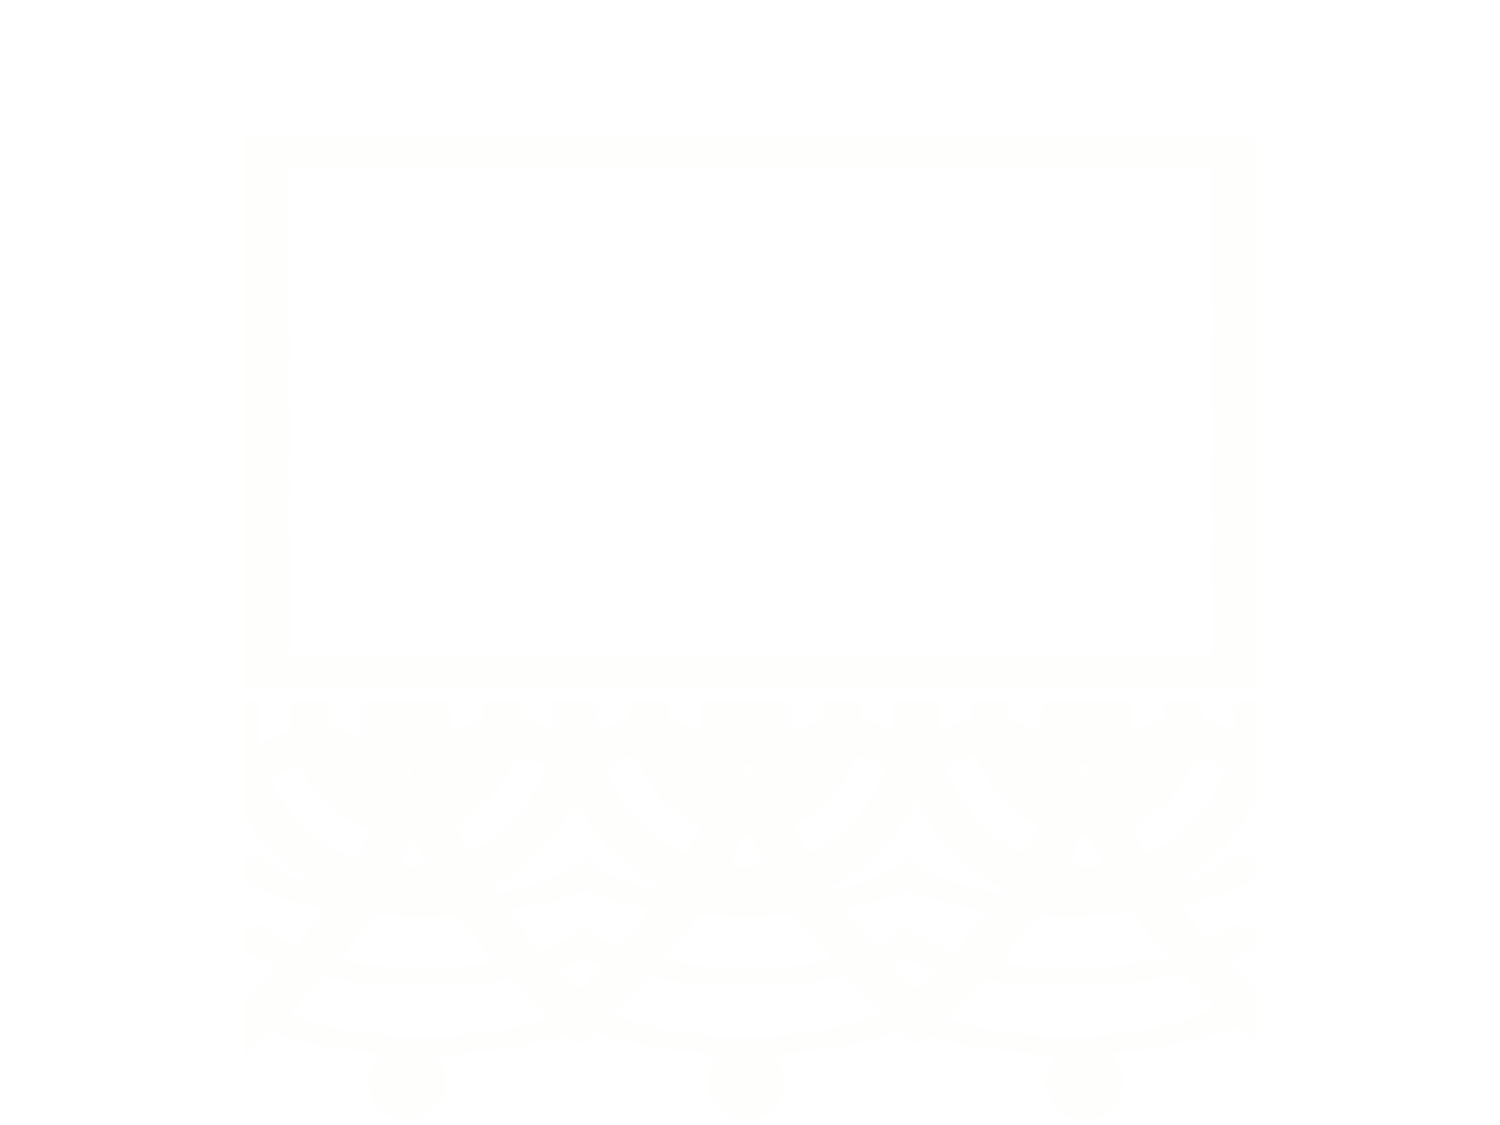 Bridal Sewing Techniques